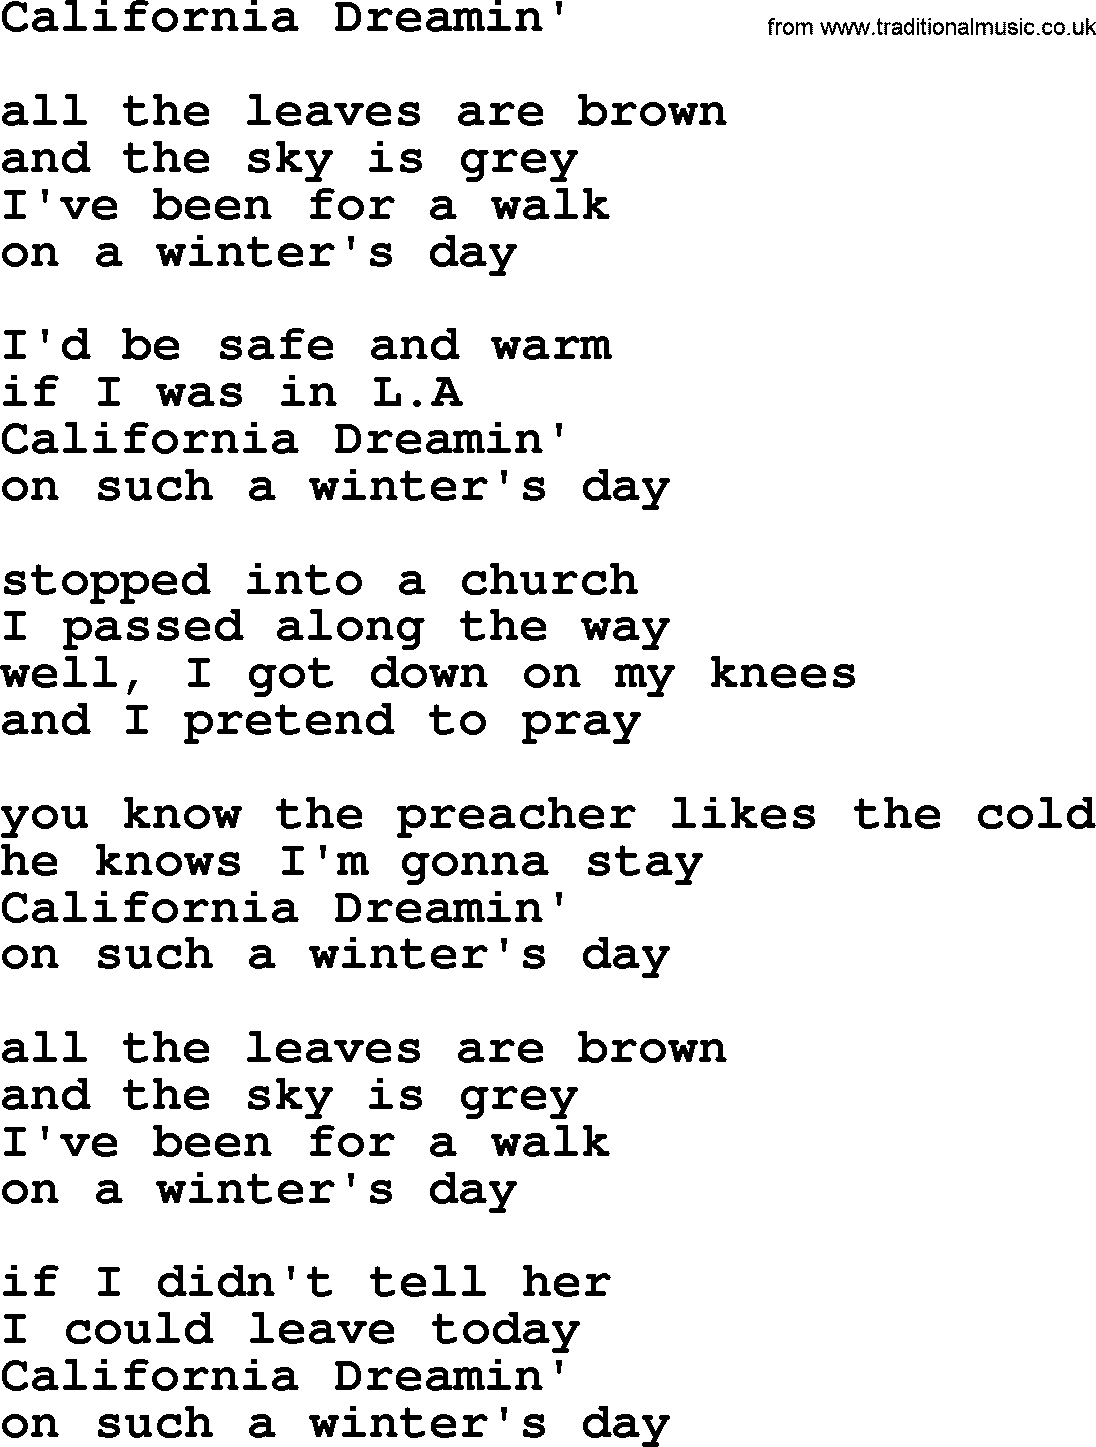 The Byrds song California Dreamin', lyrics